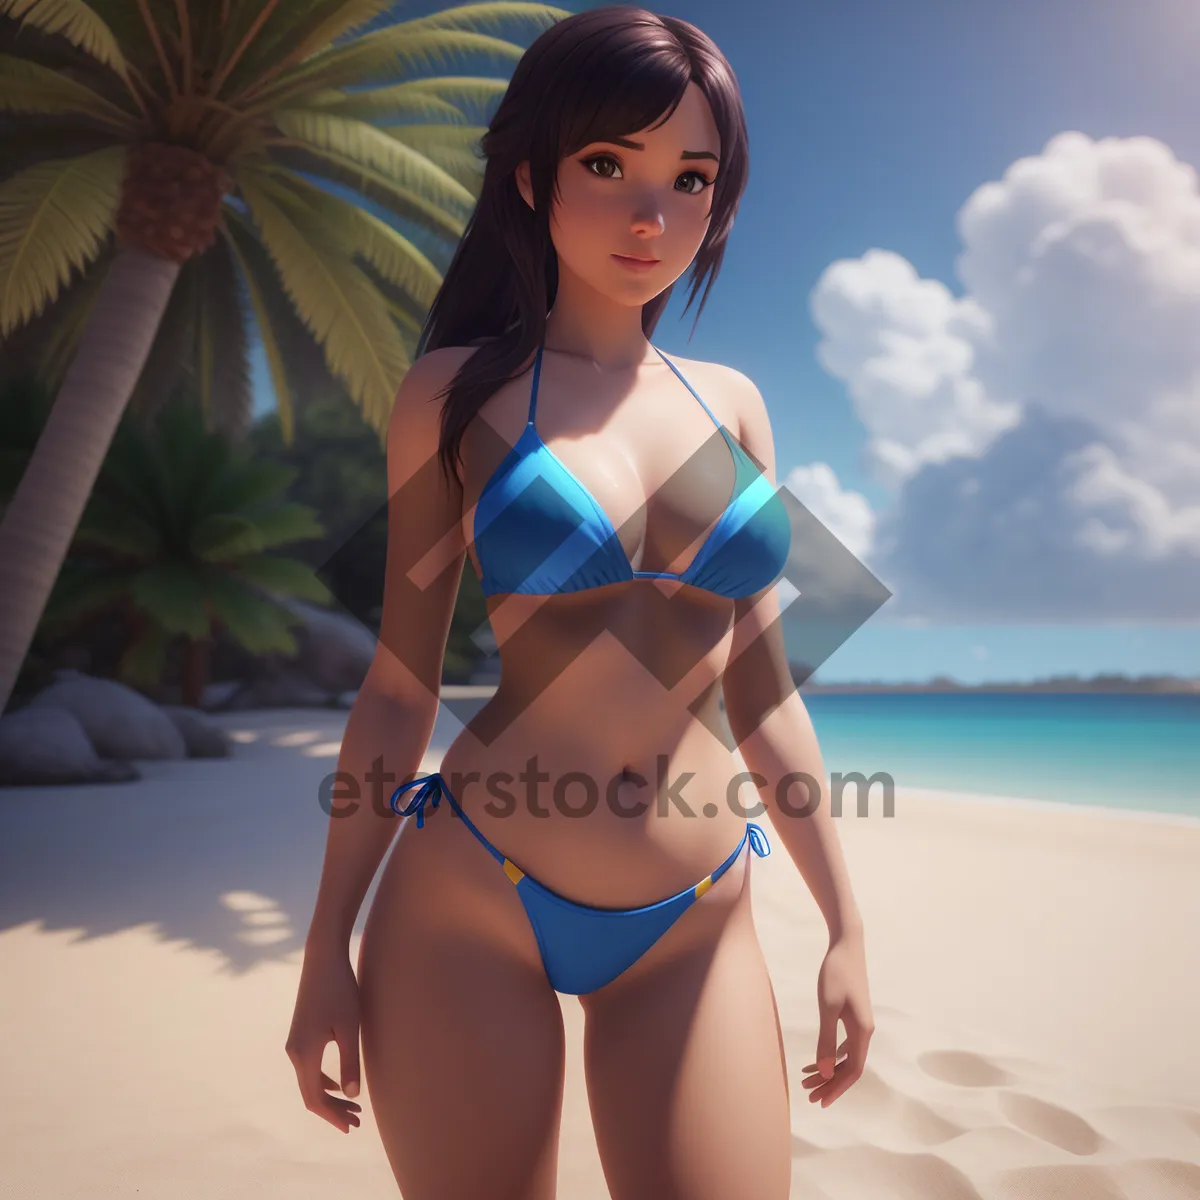 Picture of Sexy Beachwear: Attractive Bikini Swimsuit for Summer Fun